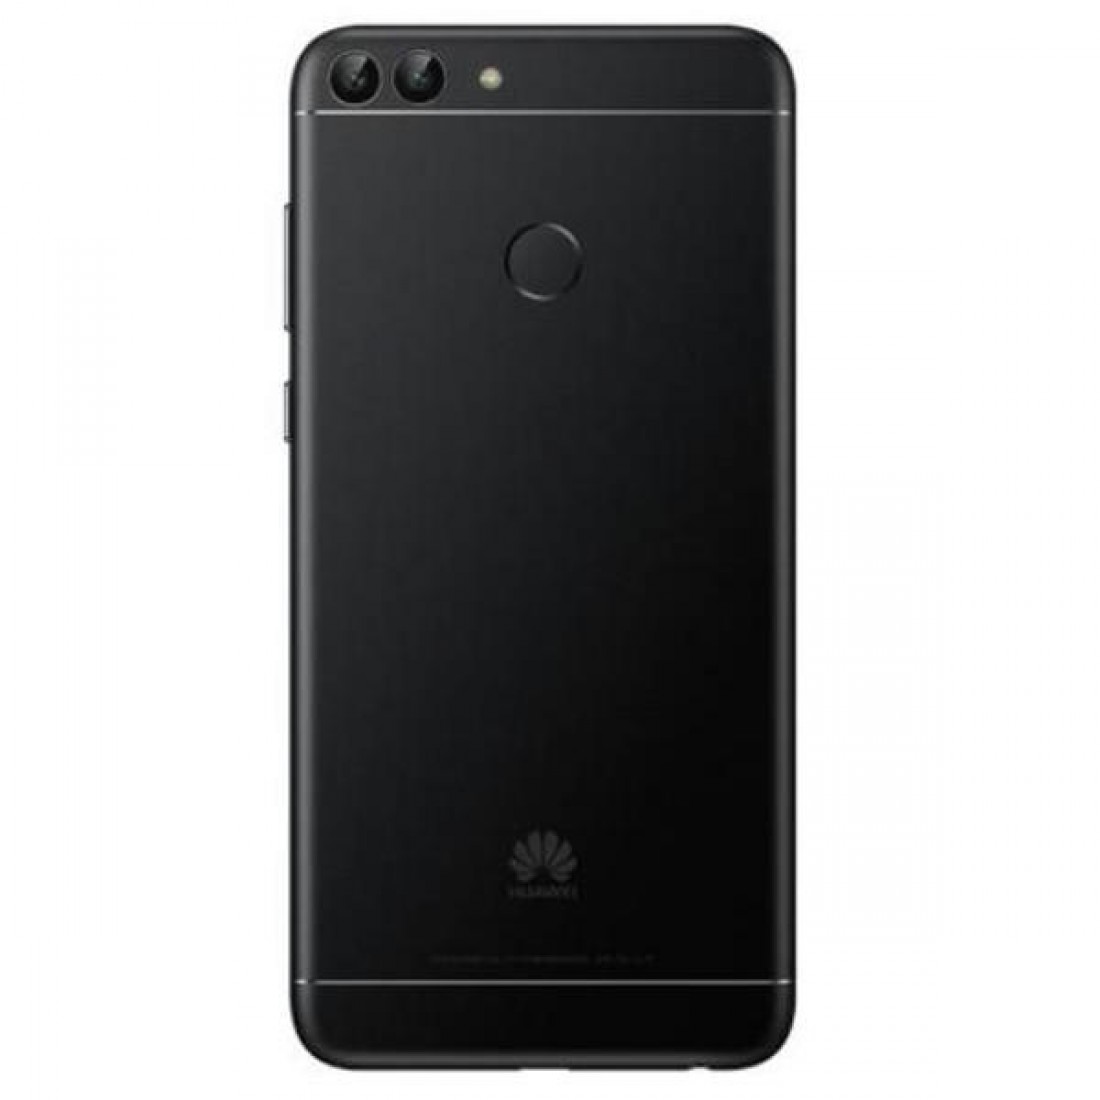 Huawei 3 32. Смартфон Huawei p Smart 32gb. Huawei p Smart 3/32gb. Смартфон Huawei p Smart Fig-lx1. Смартфон Huawei p Smart 32gb Dual SIM.